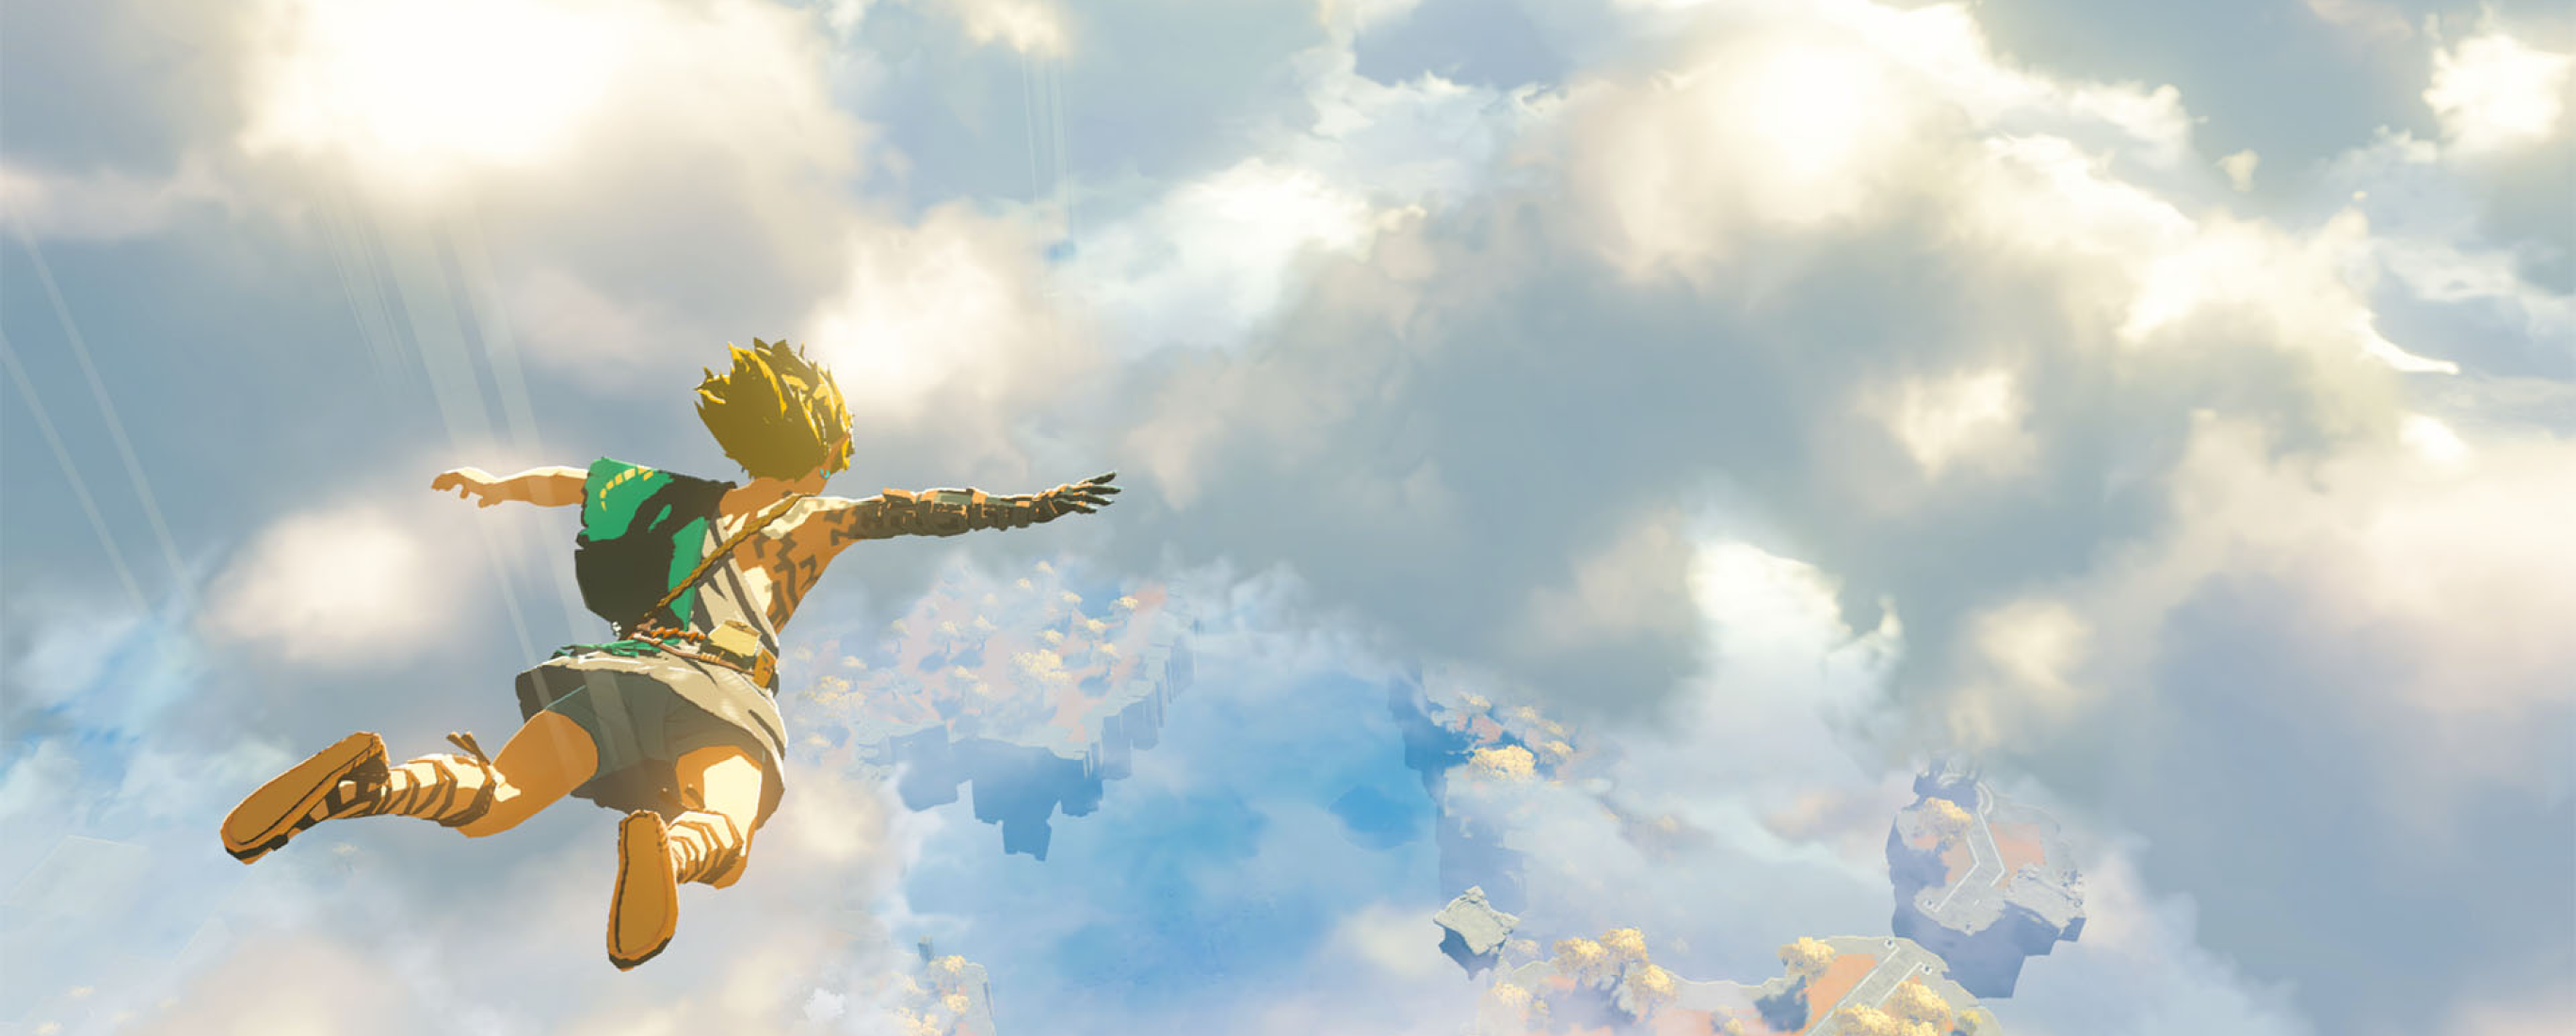 Link free falling in the beginning of Zelda Tears of the Kingdom.